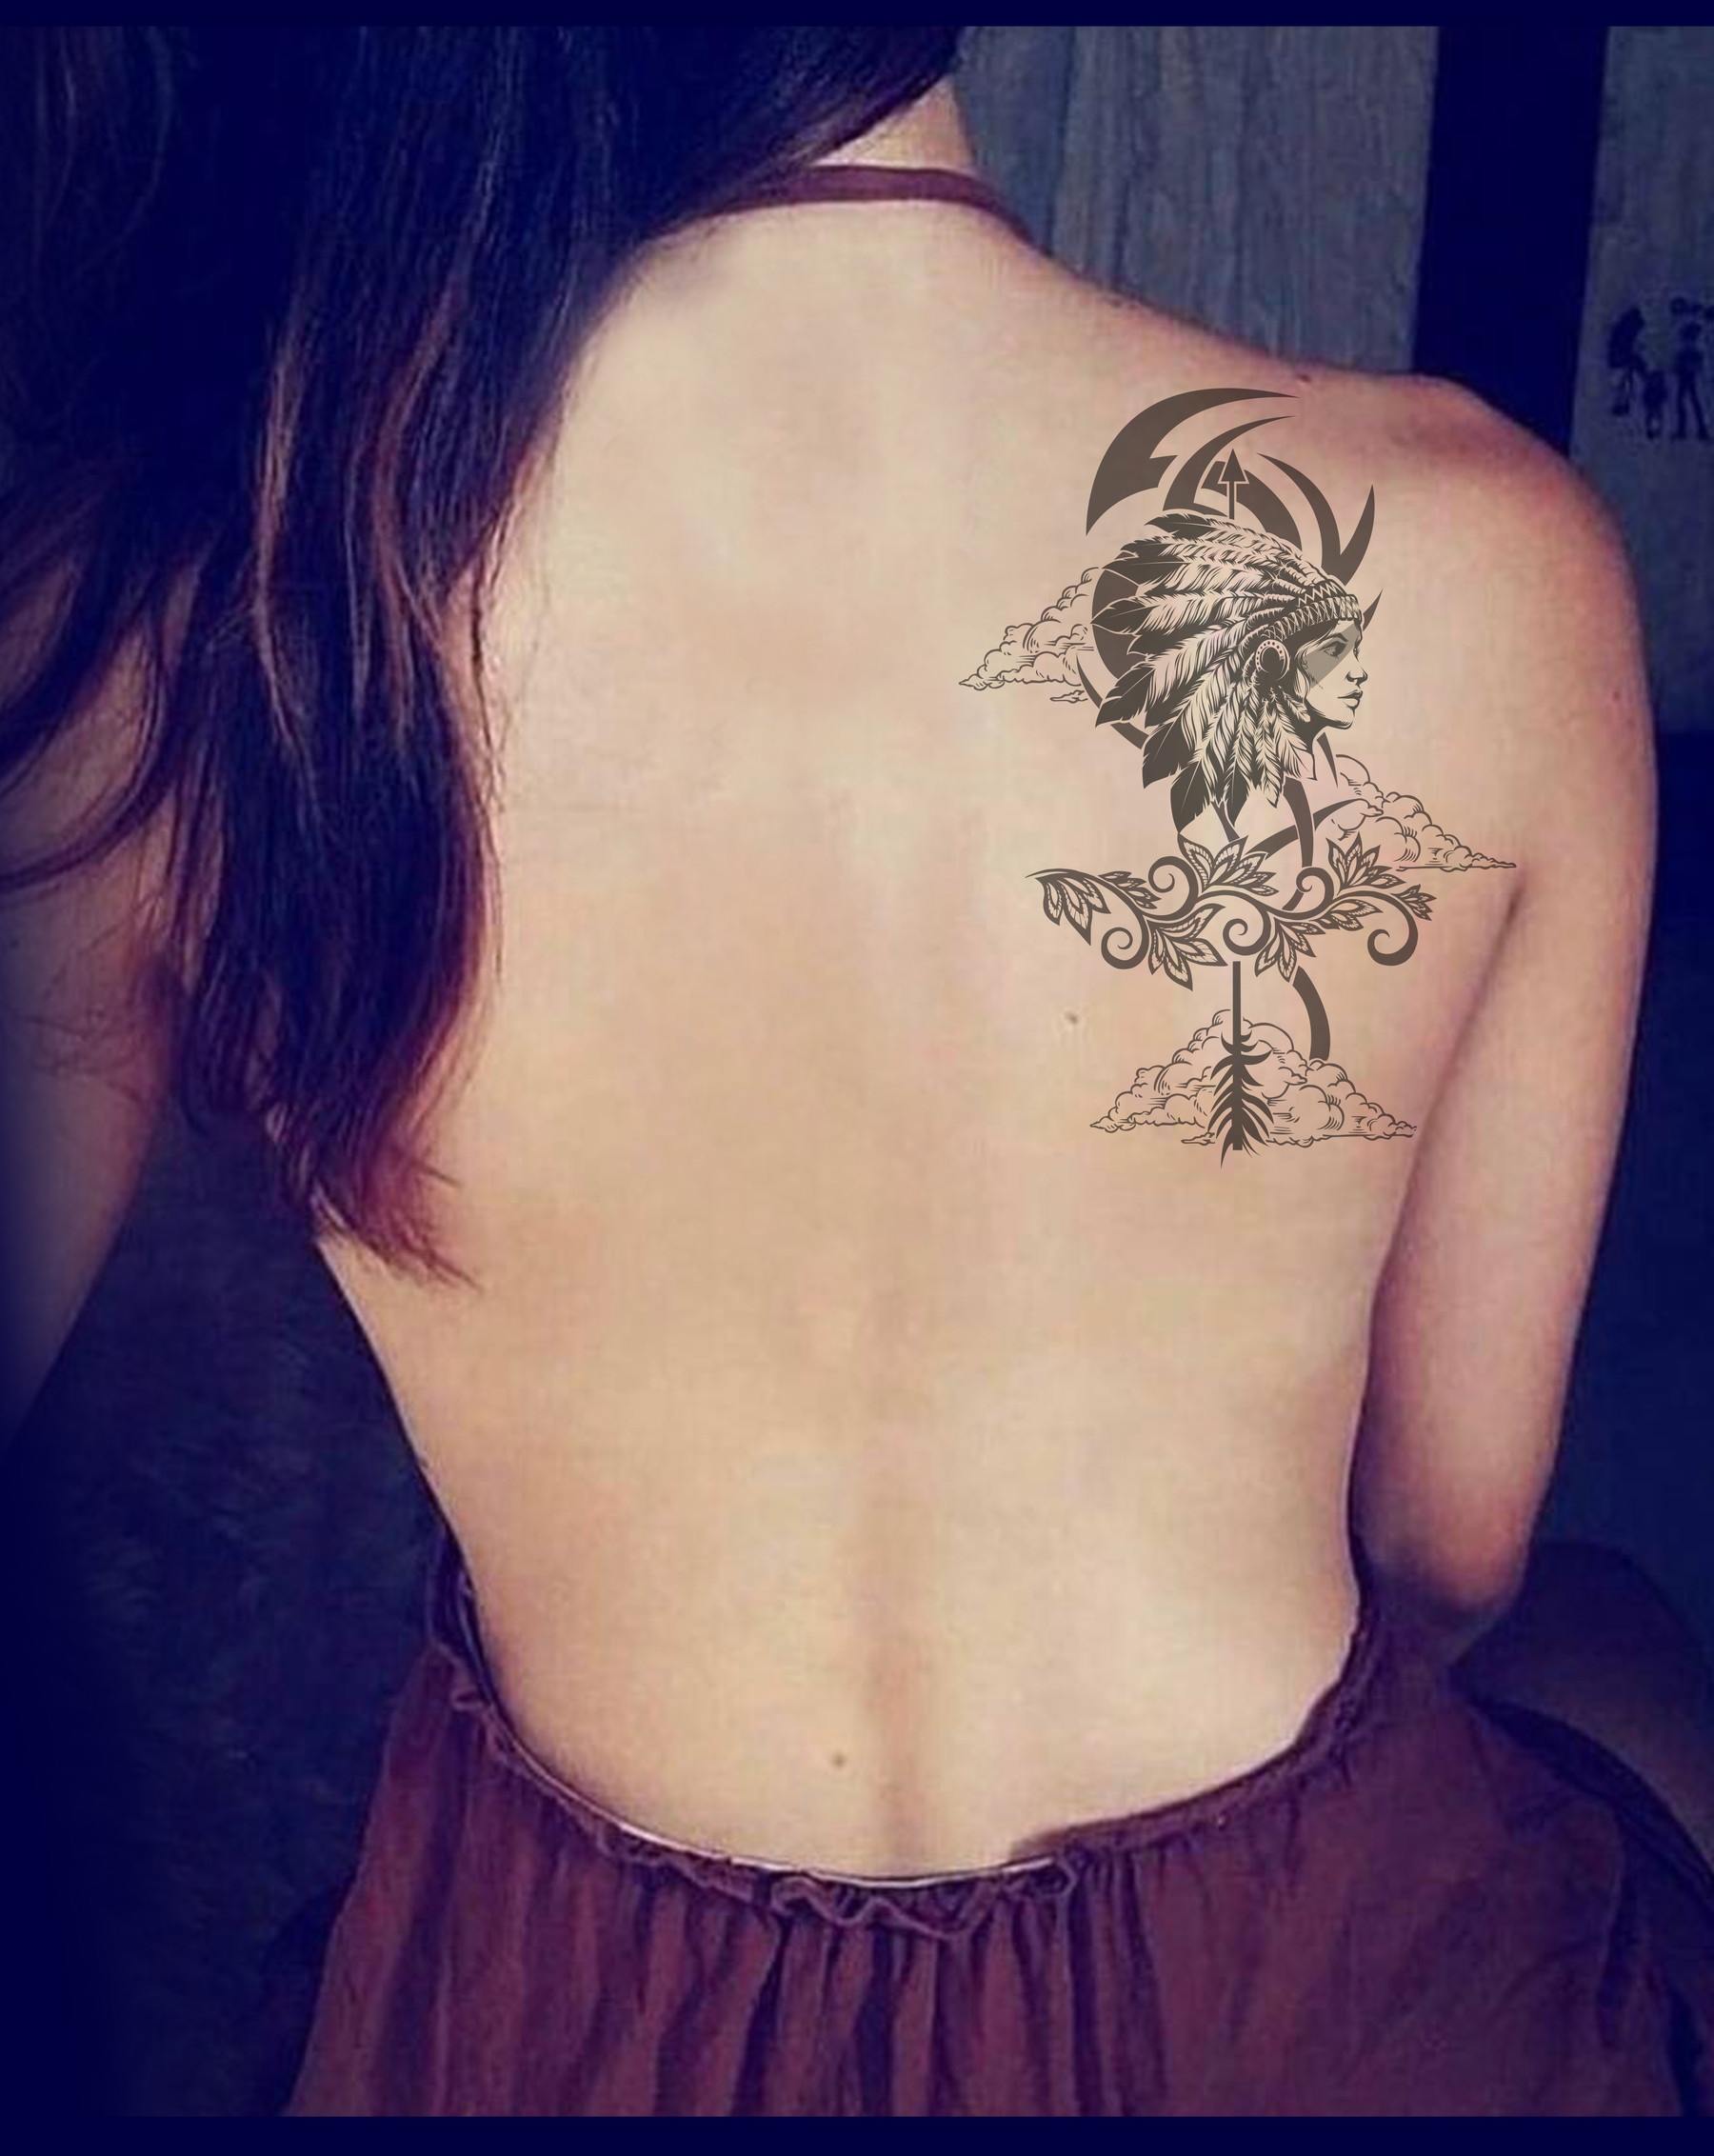 Yaro Tattoo  Native American Indian girl  tattoo tattoos tattooed  indian apache indian indiangirl nativeamerican nativeamericantattoo  nativeamericangirl feathers shaman native tatts tattooedgirls  tattoosleeve tattooideas 